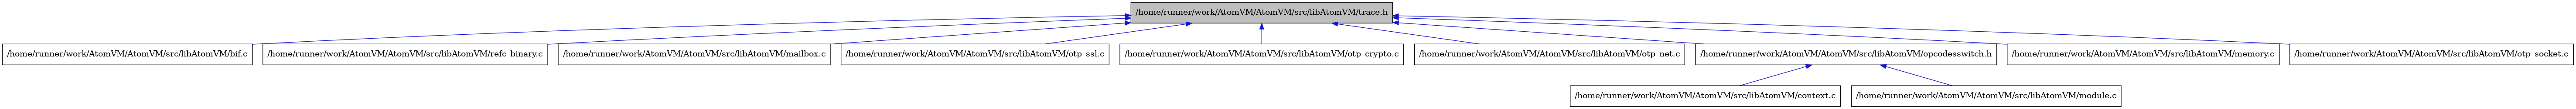 digraph {
    graph [bgcolor="#00000000"]
    node [shape=rectangle style=filled fillcolor="#FFFFFF" font=Helvetica padding=2]
    edge [color="#1414CE"]
    "2" [label="/home/runner/work/AtomVM/AtomVM/src/libAtomVM/bif.c" tooltip="/home/runner/work/AtomVM/AtomVM/src/libAtomVM/bif.c"]
    "1" [label="/home/runner/work/AtomVM/AtomVM/src/libAtomVM/trace.h" tooltip="/home/runner/work/AtomVM/AtomVM/src/libAtomVM/trace.h" fillcolor="#BFBFBF"]
    "6" [label="/home/runner/work/AtomVM/AtomVM/src/libAtomVM/context.c" tooltip="/home/runner/work/AtomVM/AtomVM/src/libAtomVM/context.c"]
    "12" [label="/home/runner/work/AtomVM/AtomVM/src/libAtomVM/refc_binary.c" tooltip="/home/runner/work/AtomVM/AtomVM/src/libAtomVM/refc_binary.c"]
    "3" [label="/home/runner/work/AtomVM/AtomVM/src/libAtomVM/mailbox.c" tooltip="/home/runner/work/AtomVM/AtomVM/src/libAtomVM/mailbox.c"]
    "7" [label="/home/runner/work/AtomVM/AtomVM/src/libAtomVM/module.c" tooltip="/home/runner/work/AtomVM/AtomVM/src/libAtomVM/module.c"]
    "11" [label="/home/runner/work/AtomVM/AtomVM/src/libAtomVM/otp_ssl.c" tooltip="/home/runner/work/AtomVM/AtomVM/src/libAtomVM/otp_ssl.c"]
    "8" [label="/home/runner/work/AtomVM/AtomVM/src/libAtomVM/otp_crypto.c" tooltip="/home/runner/work/AtomVM/AtomVM/src/libAtomVM/otp_crypto.c"]
    "9" [label="/home/runner/work/AtomVM/AtomVM/src/libAtomVM/otp_net.c" tooltip="/home/runner/work/AtomVM/AtomVM/src/libAtomVM/otp_net.c"]
    "5" [label="/home/runner/work/AtomVM/AtomVM/src/libAtomVM/opcodesswitch.h" tooltip="/home/runner/work/AtomVM/AtomVM/src/libAtomVM/opcodesswitch.h"]
    "4" [label="/home/runner/work/AtomVM/AtomVM/src/libAtomVM/memory.c" tooltip="/home/runner/work/AtomVM/AtomVM/src/libAtomVM/memory.c"]
    "10" [label="/home/runner/work/AtomVM/AtomVM/src/libAtomVM/otp_socket.c" tooltip="/home/runner/work/AtomVM/AtomVM/src/libAtomVM/otp_socket.c"]
    "1" -> "2" [dir=back tooltip="include"]
    "1" -> "3" [dir=back tooltip="include"]
    "1" -> "4" [dir=back tooltip="include"]
    "1" -> "5" [dir=back tooltip="include"]
    "1" -> "8" [dir=back tooltip="include"]
    "1" -> "9" [dir=back tooltip="include"]
    "1" -> "10" [dir=back tooltip="include"]
    "1" -> "11" [dir=back tooltip="include"]
    "1" -> "12" [dir=back tooltip="include"]
    "5" -> "6" [dir=back tooltip="include"]
    "5" -> "7" [dir=back tooltip="include"]
}